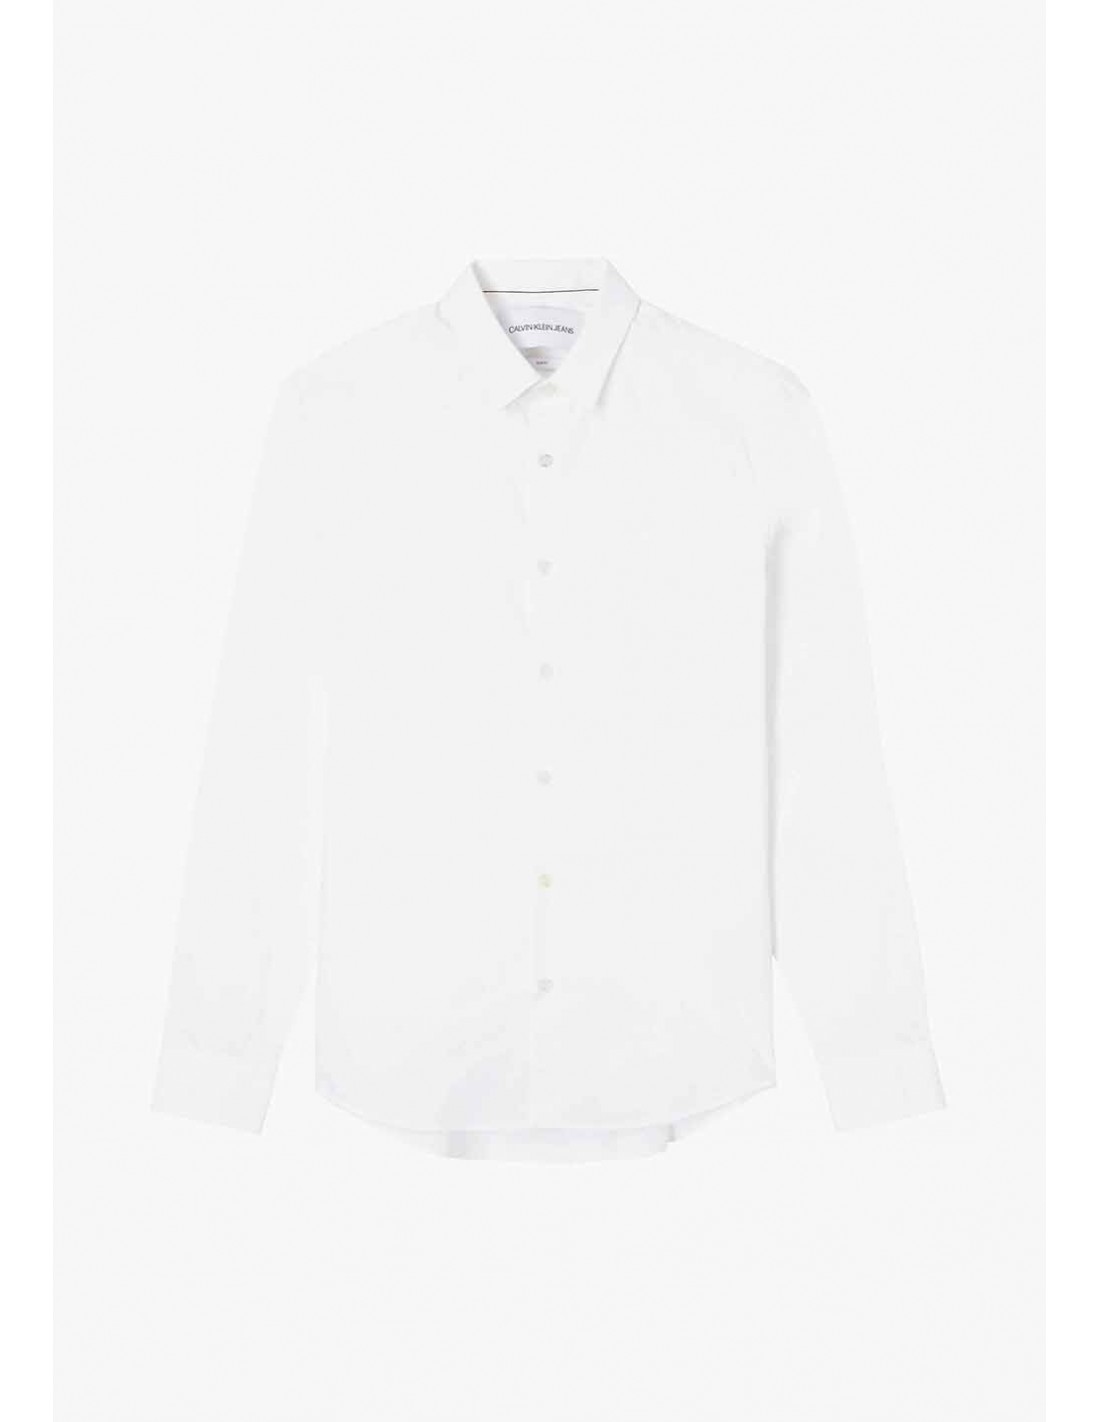 Camisa Calvin blanca strech slim f